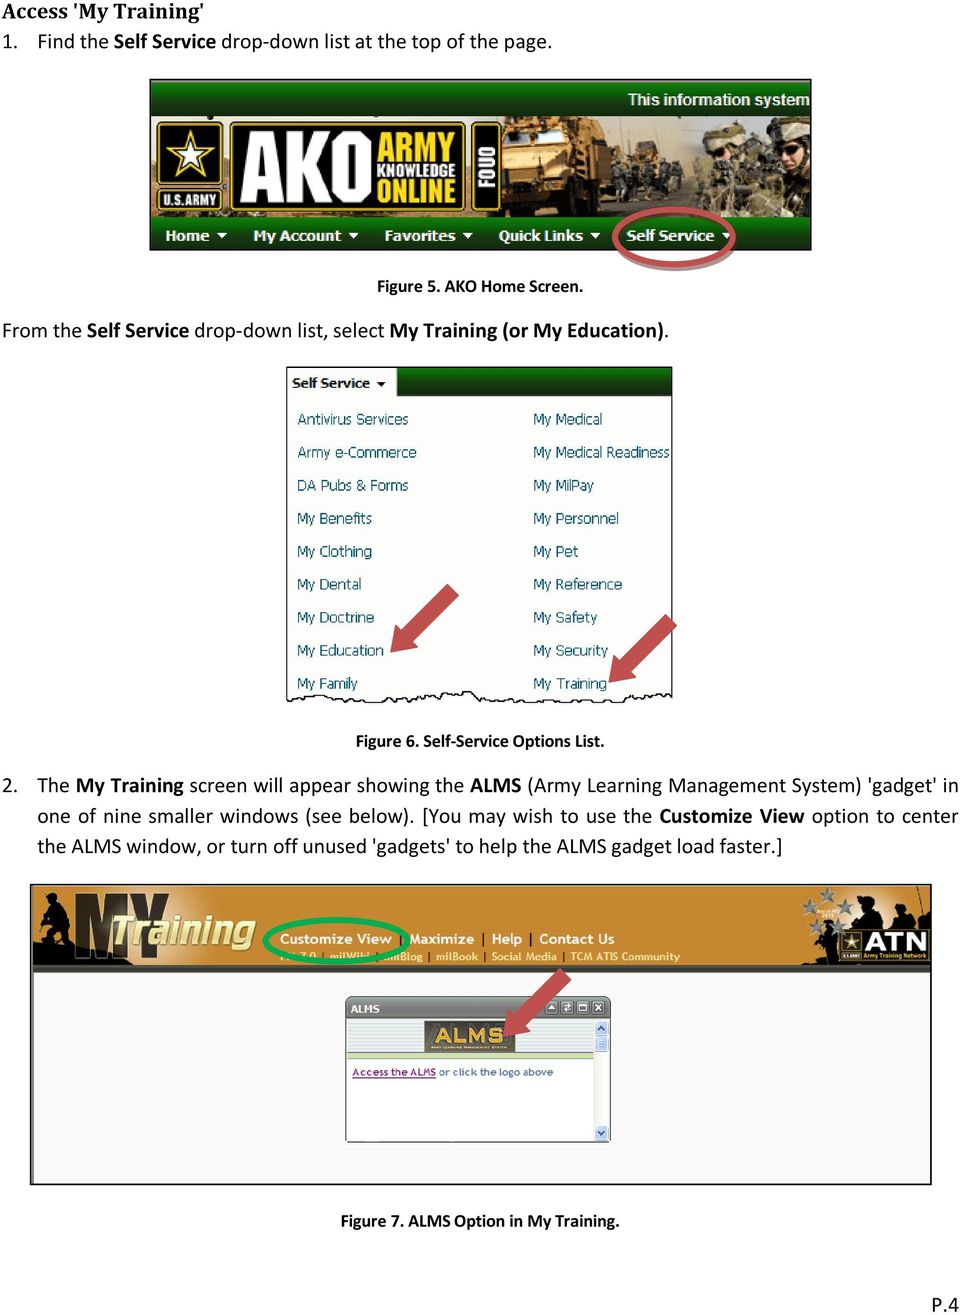 part 1 alms access via ako (army knowledge online) - pdf